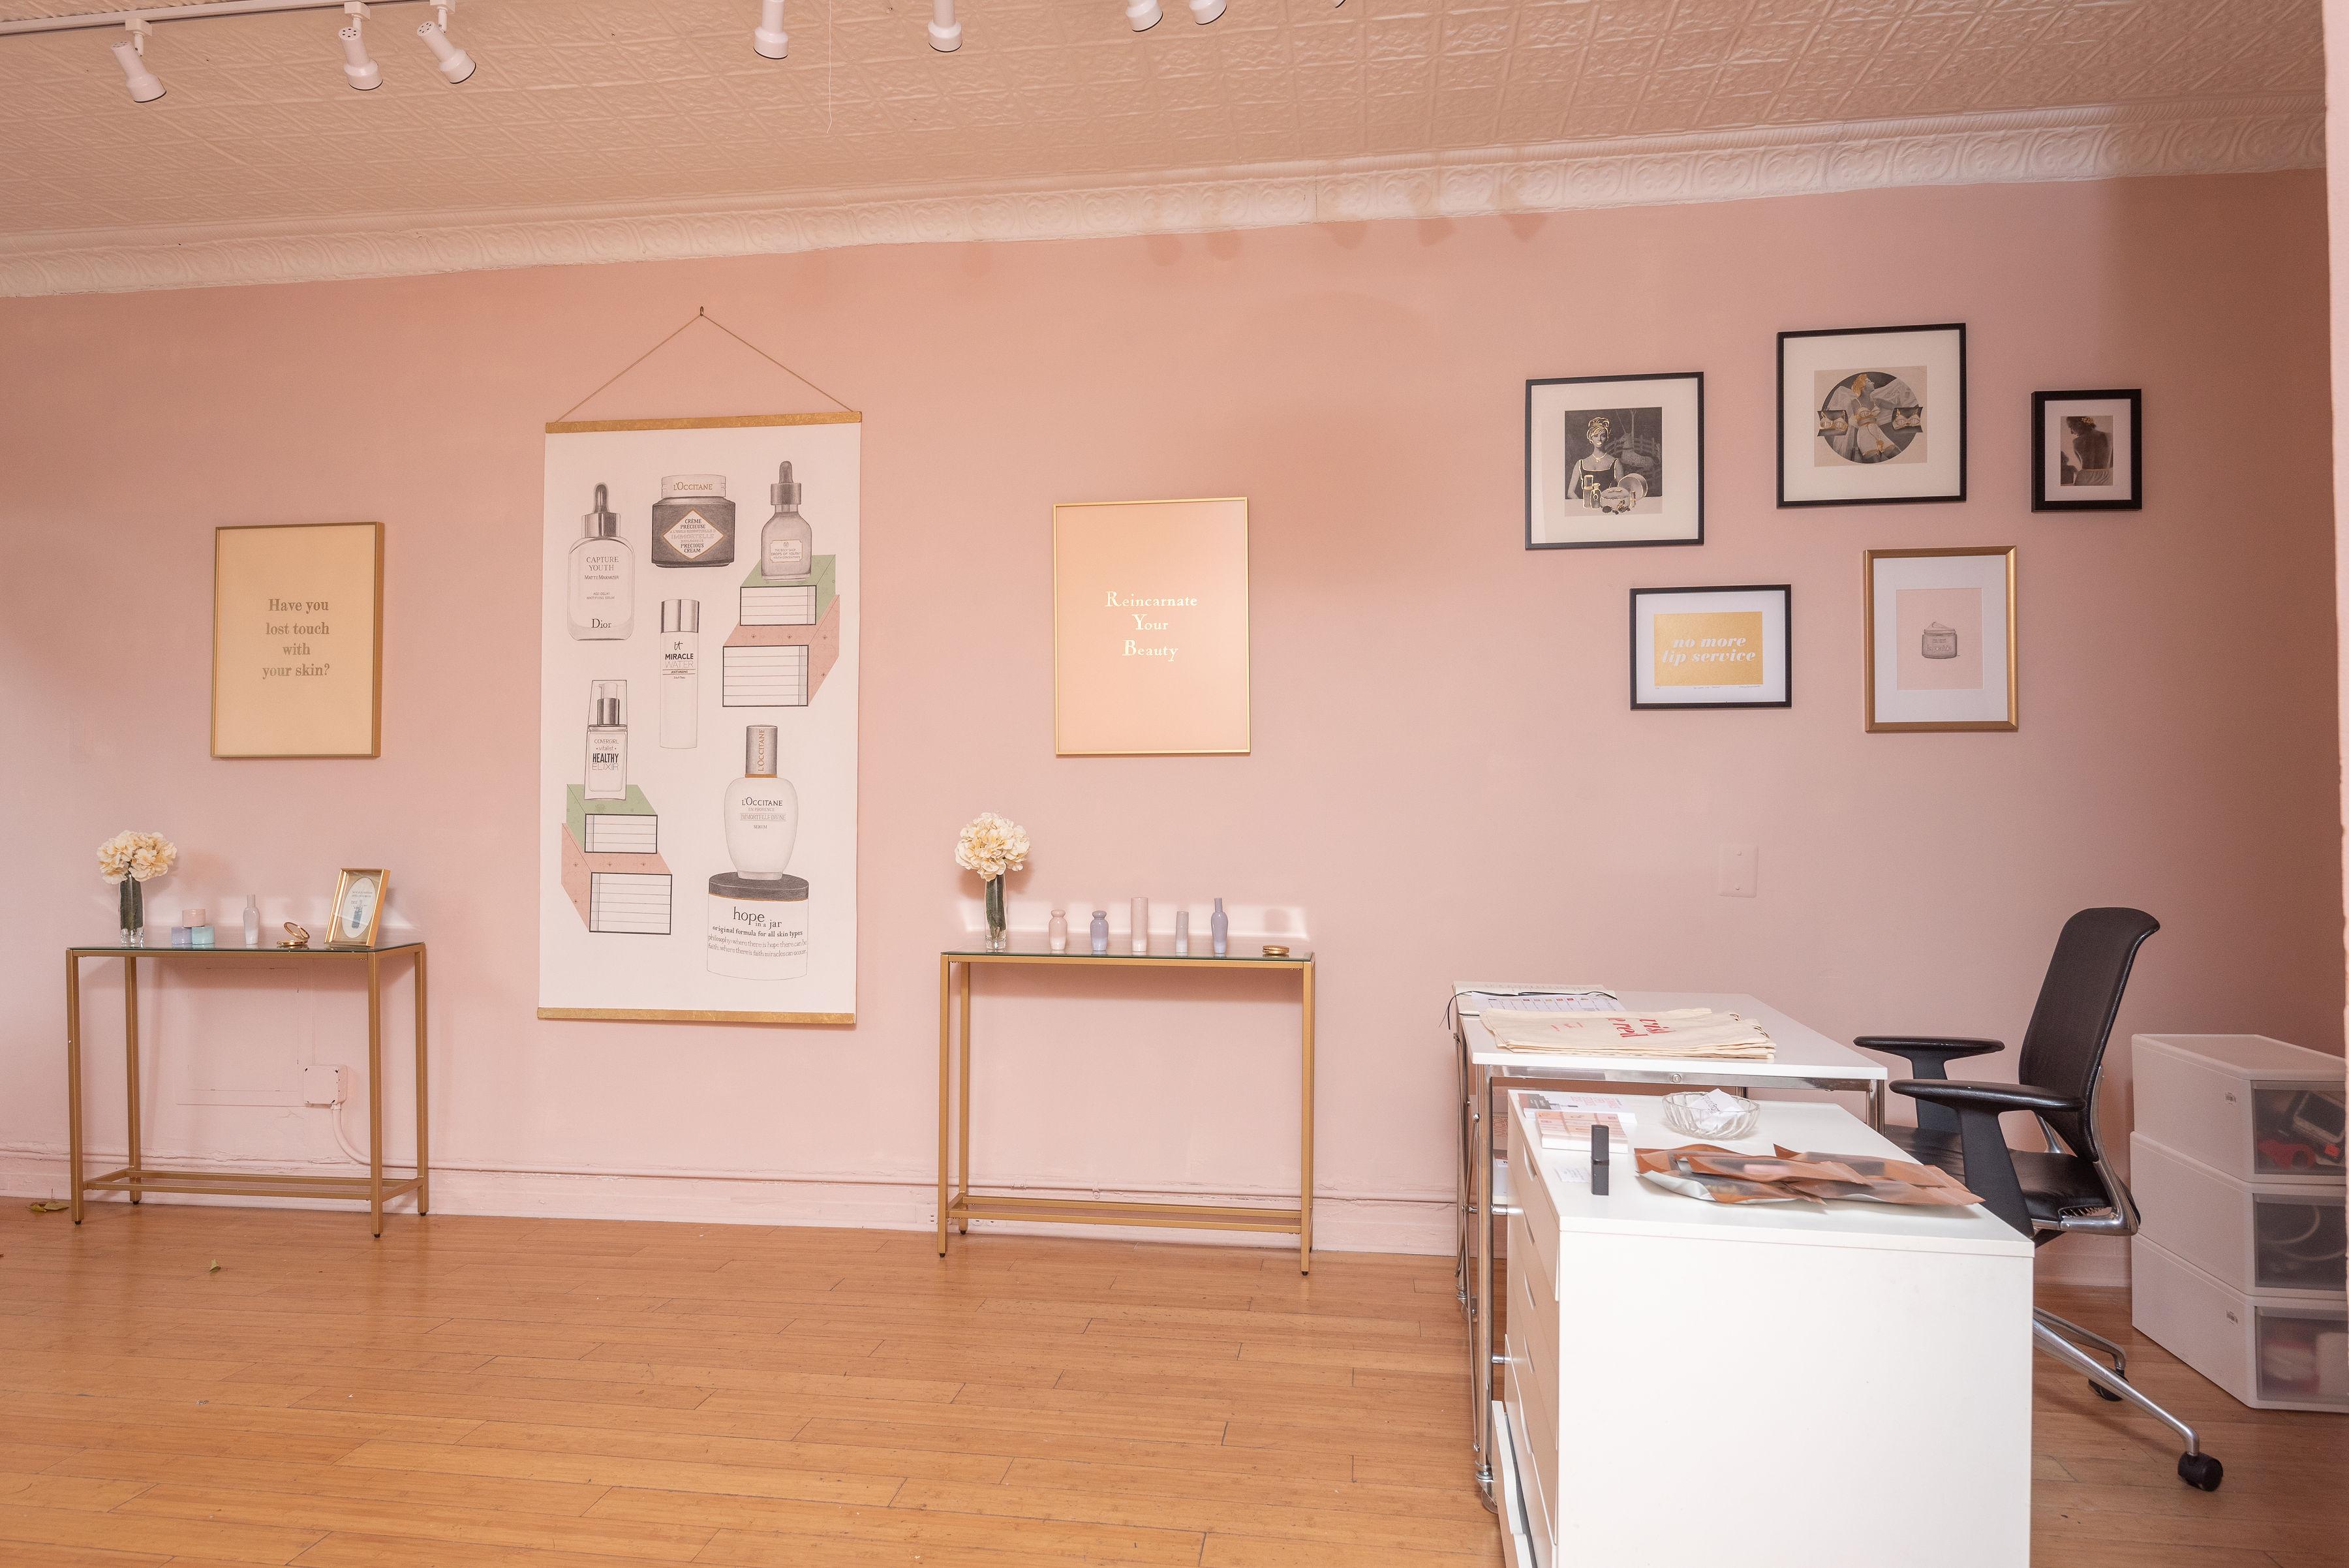 Ground Floor Gallery in Park Slope, Brooklyn is proud to present, 